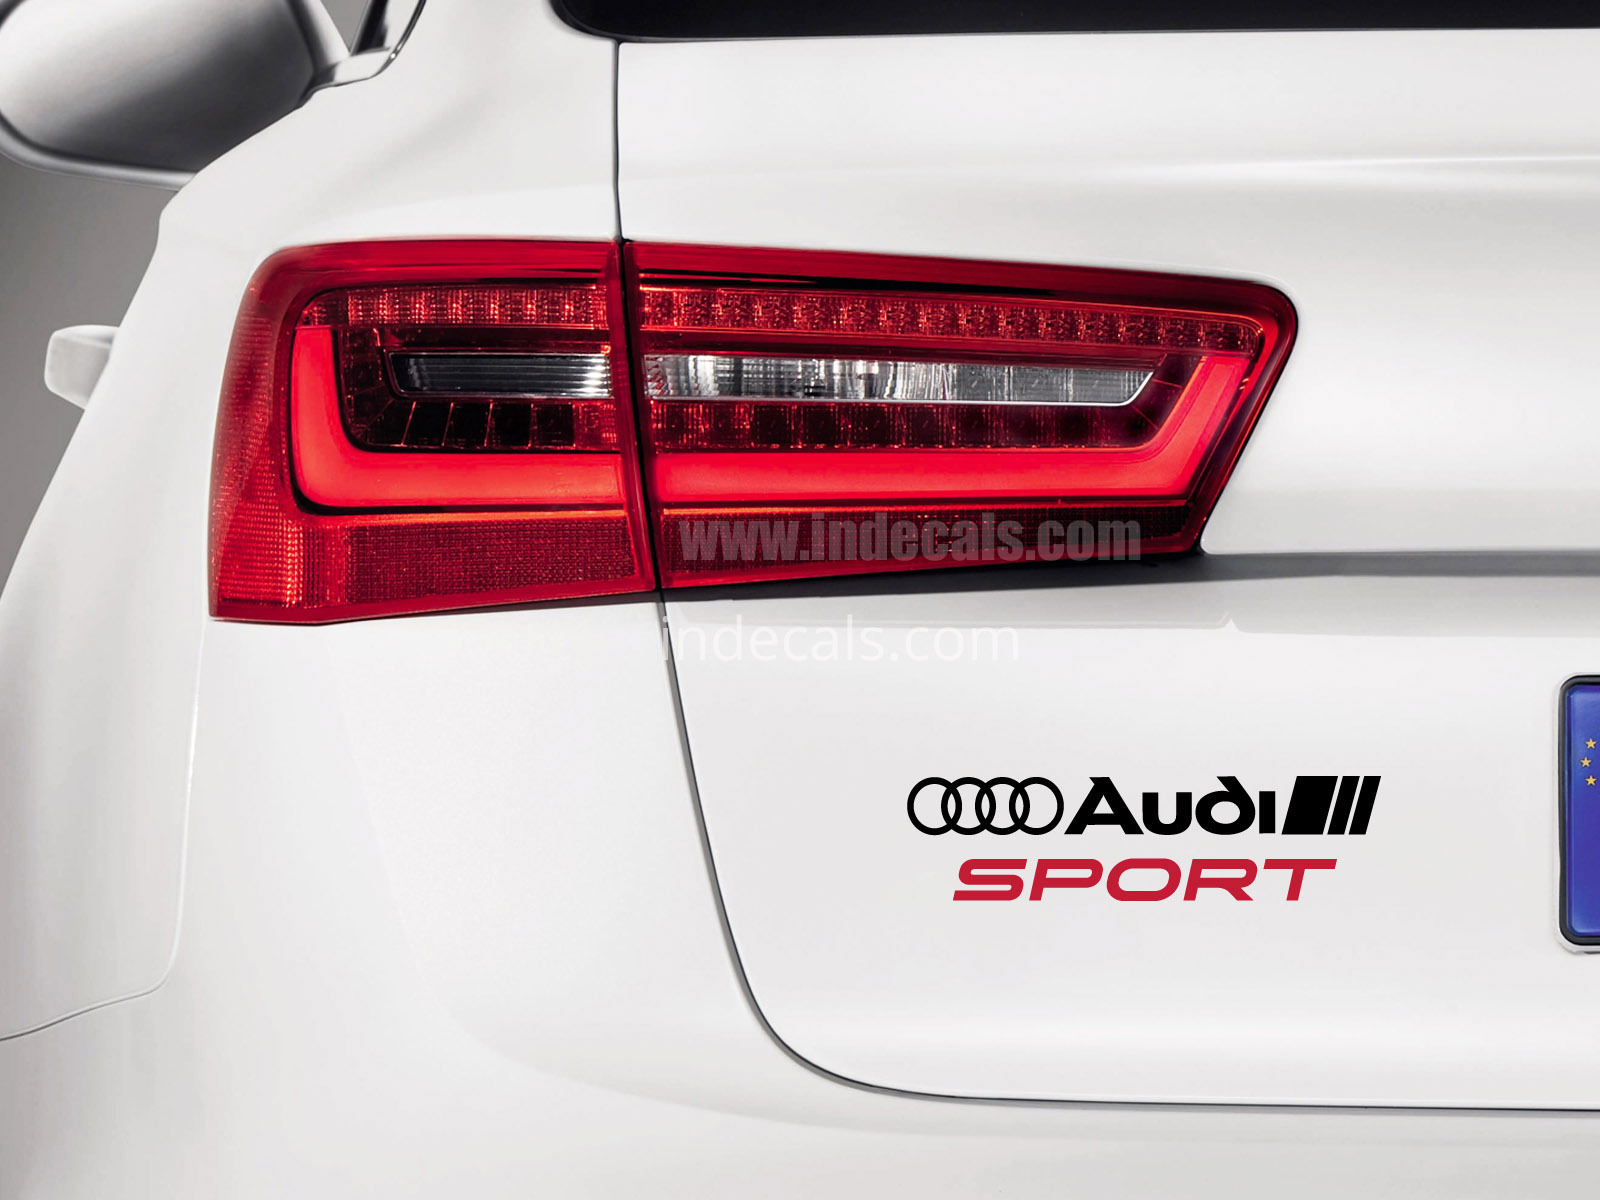 1 x Audi Sports Sticker for Trunk - Black & Red